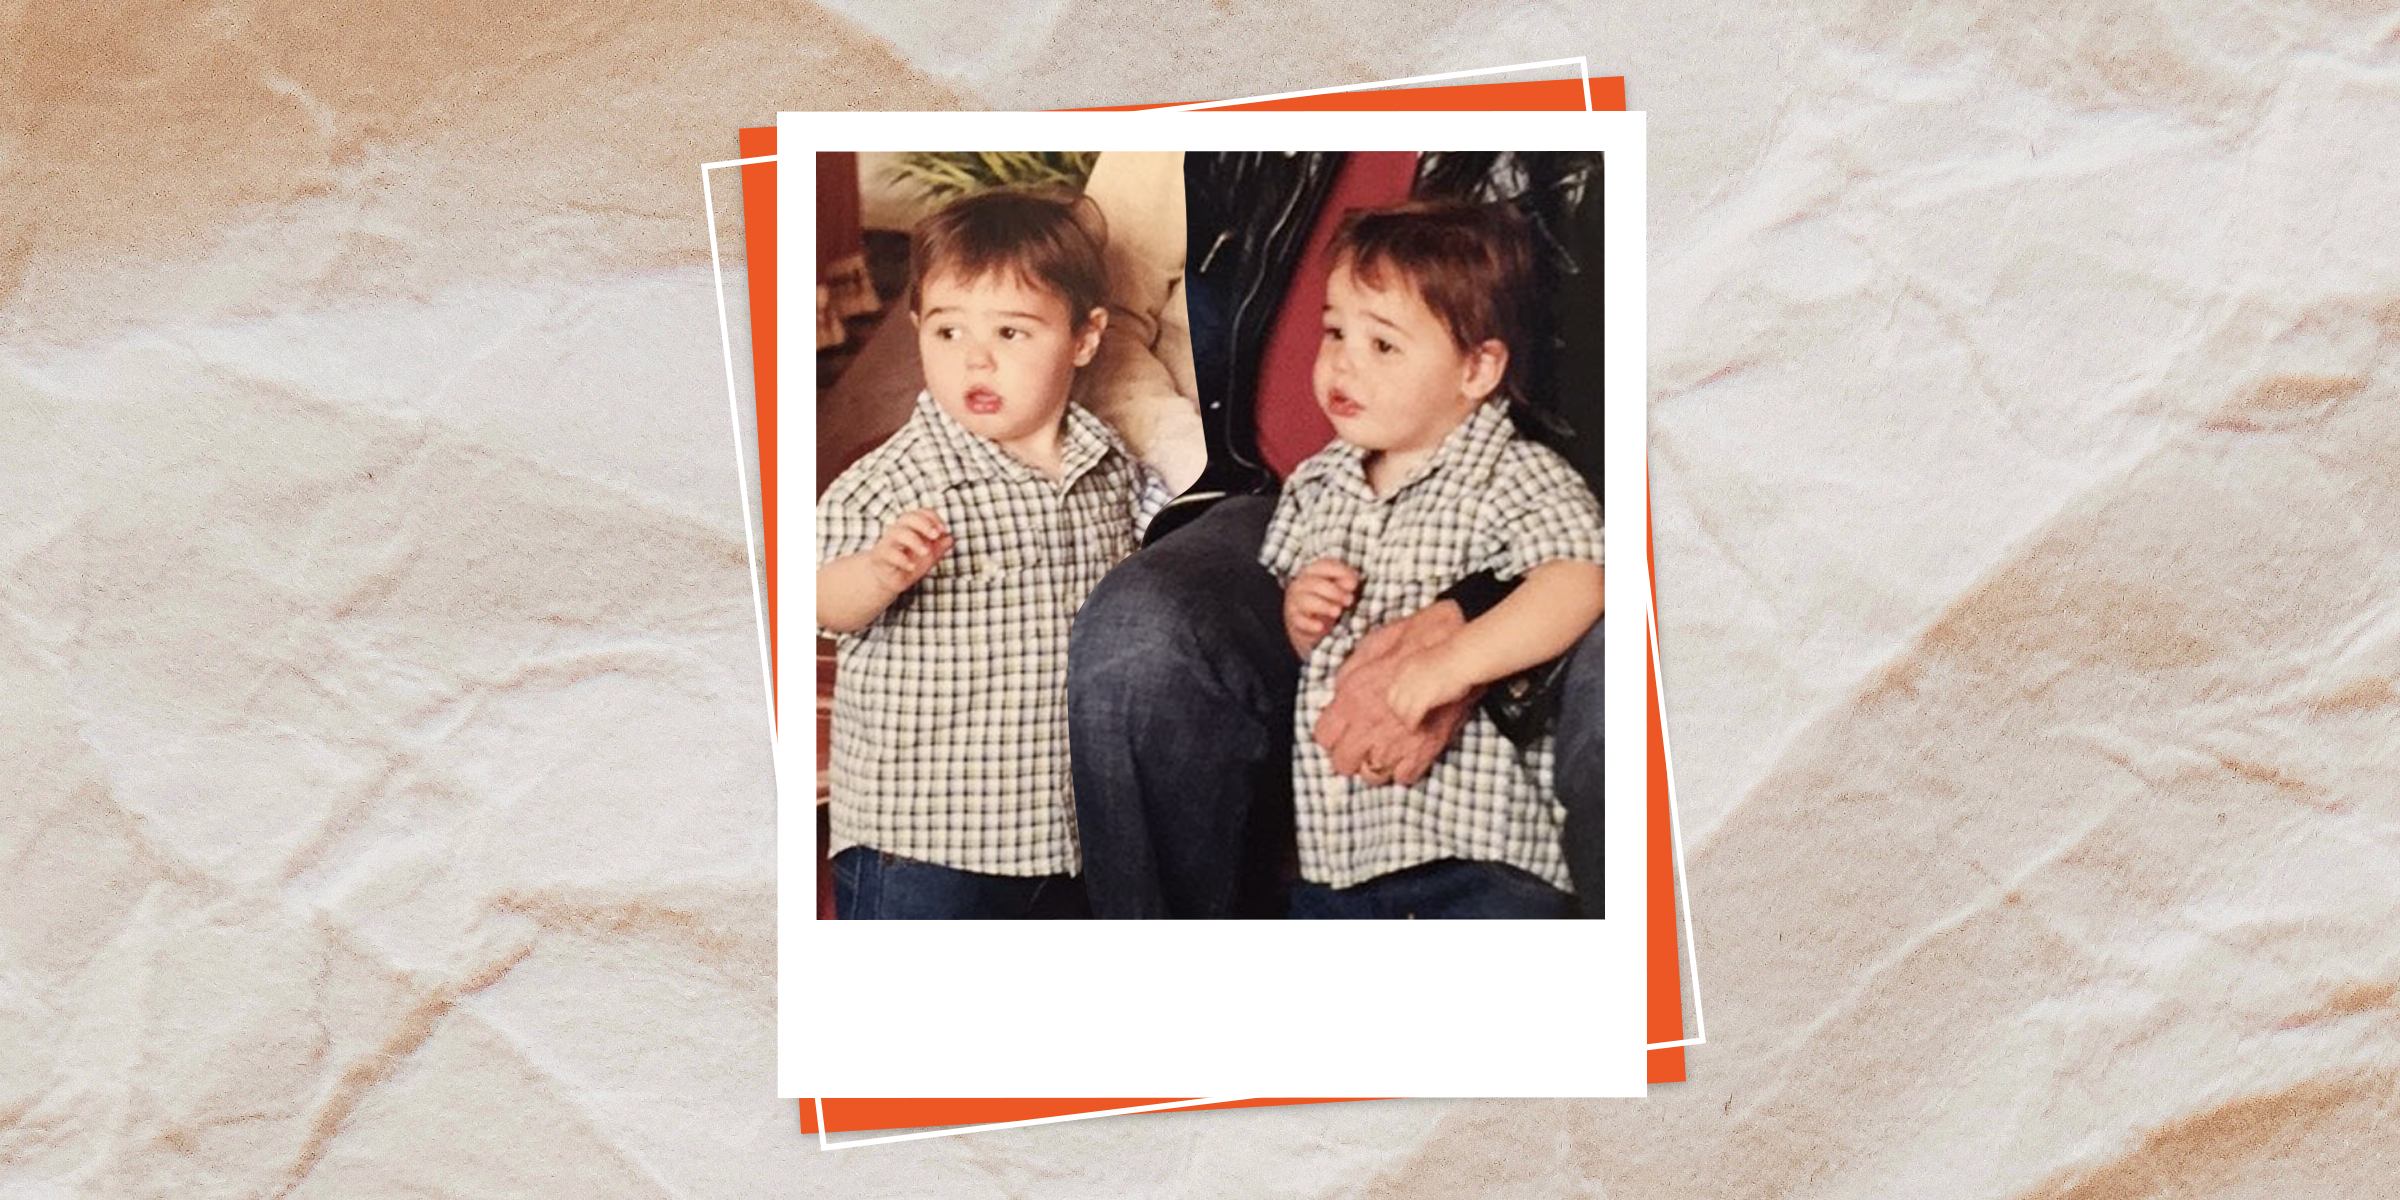 Los gemelos de la famosa estrella, 2017 | Foto: Instagram.com/wandamillerrogers